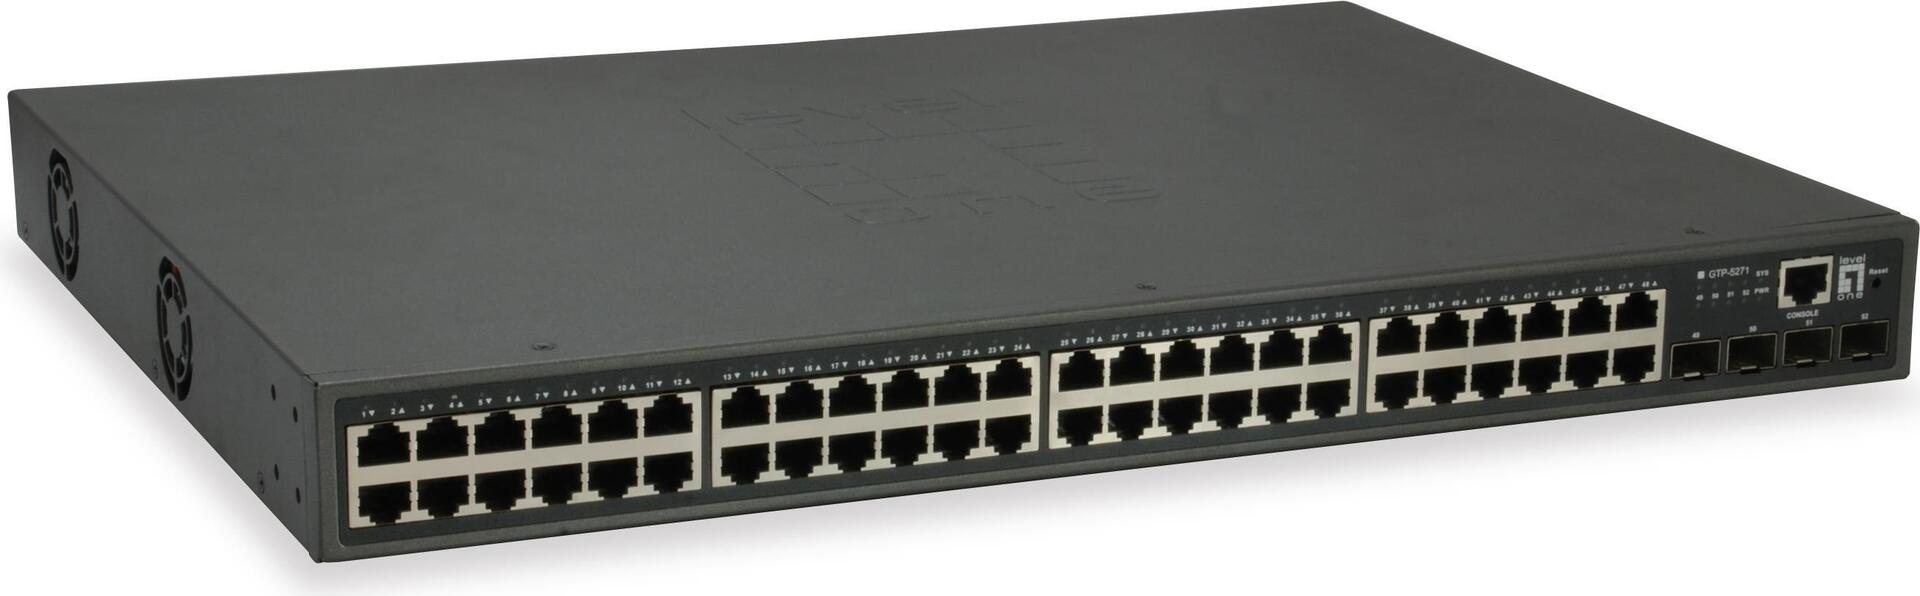 LevelOne GTP-5271 Managed L3 Gigabit Ethernet (10/100/1000) Grau Power over Ethernet (PoE) (GTP-5271)